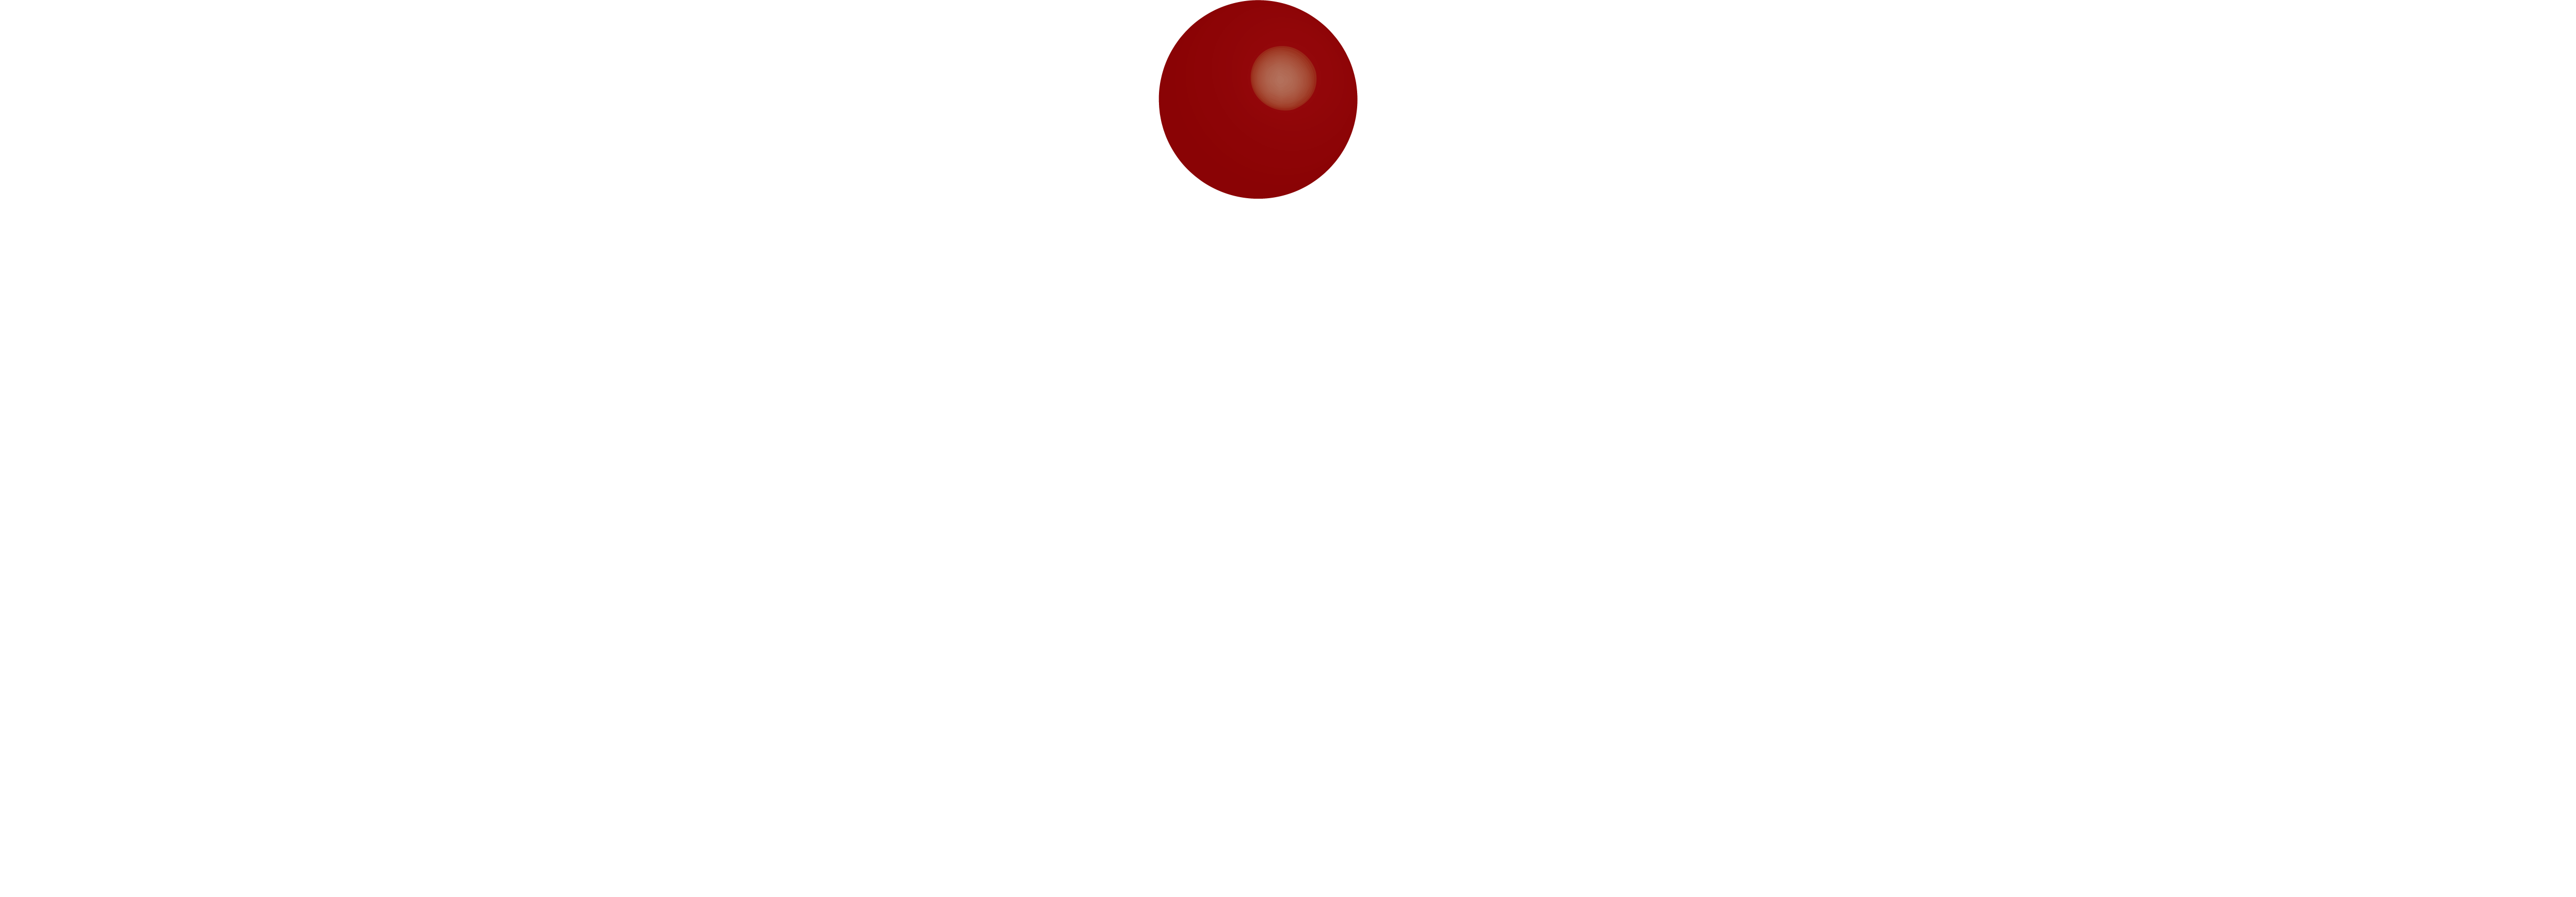 Robotics Technology Park logo - white